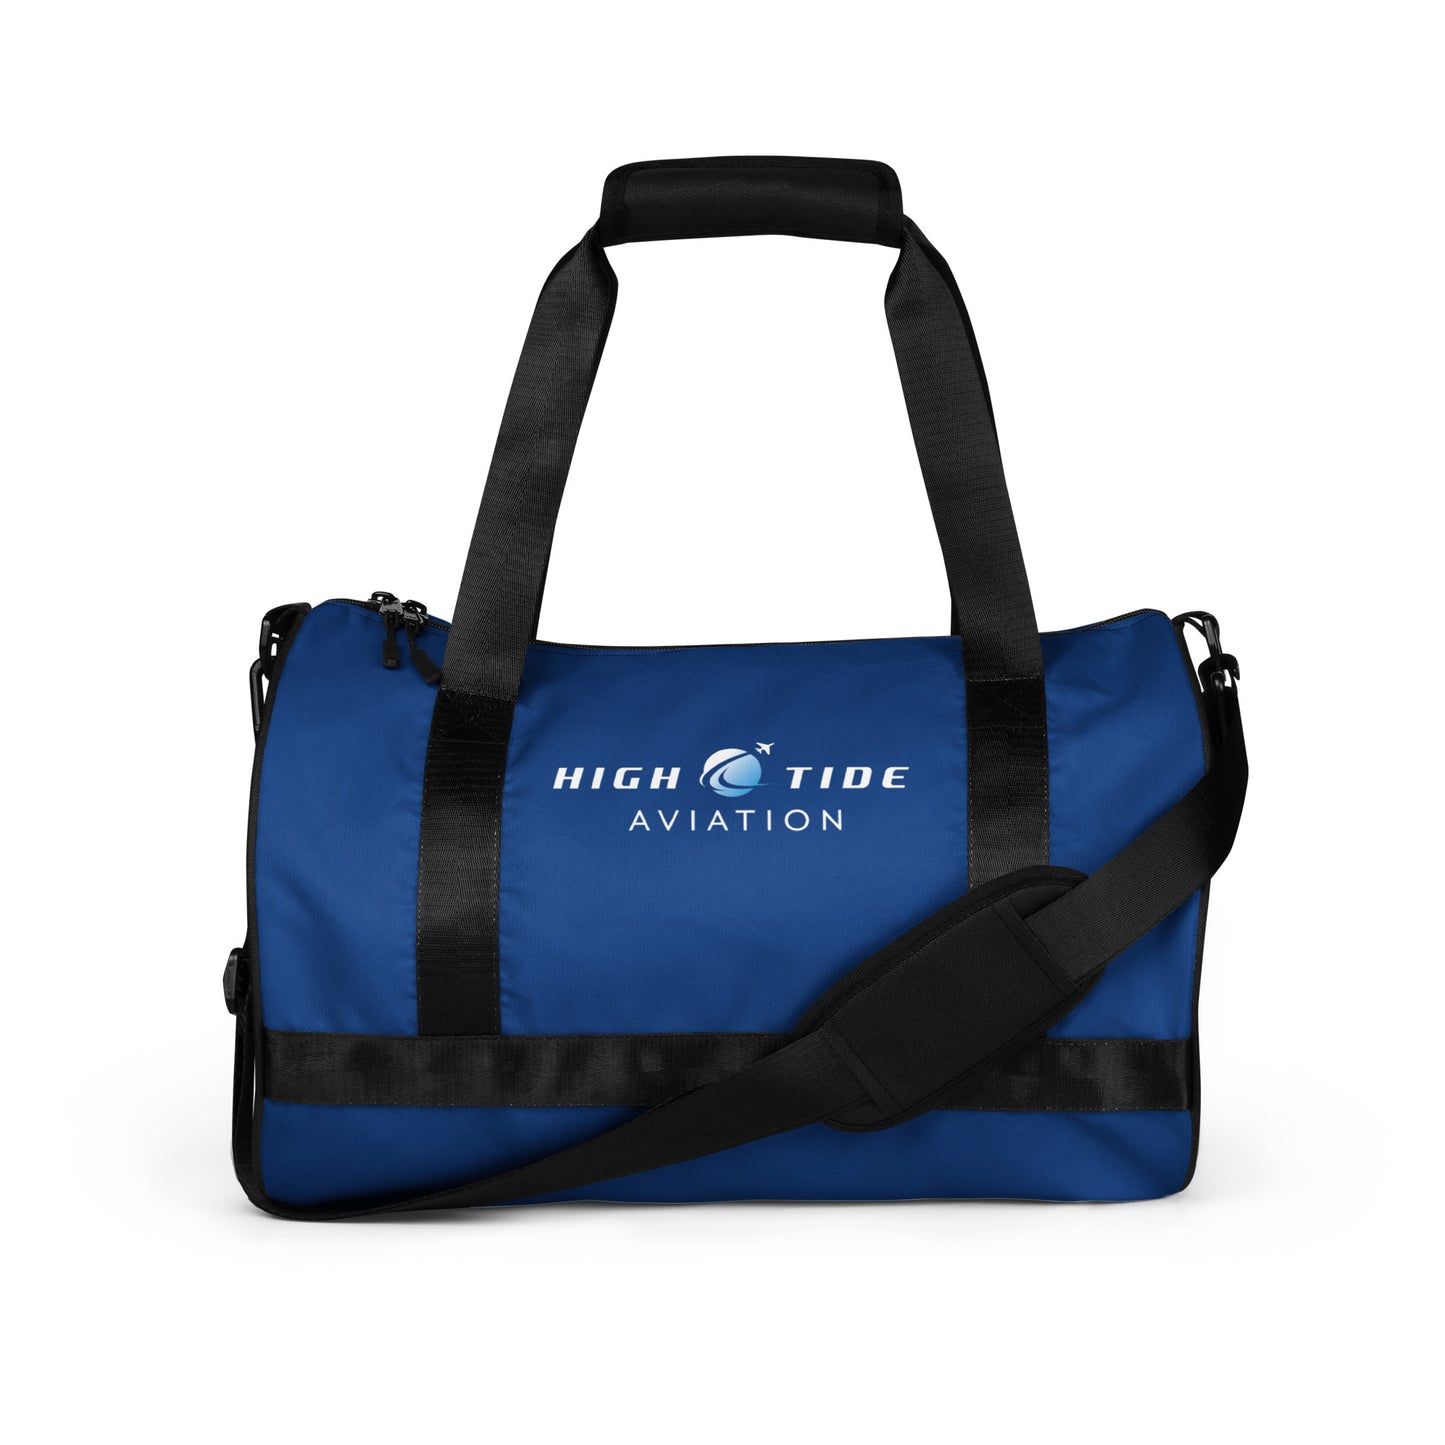 High Tide Aviation Gym Bag